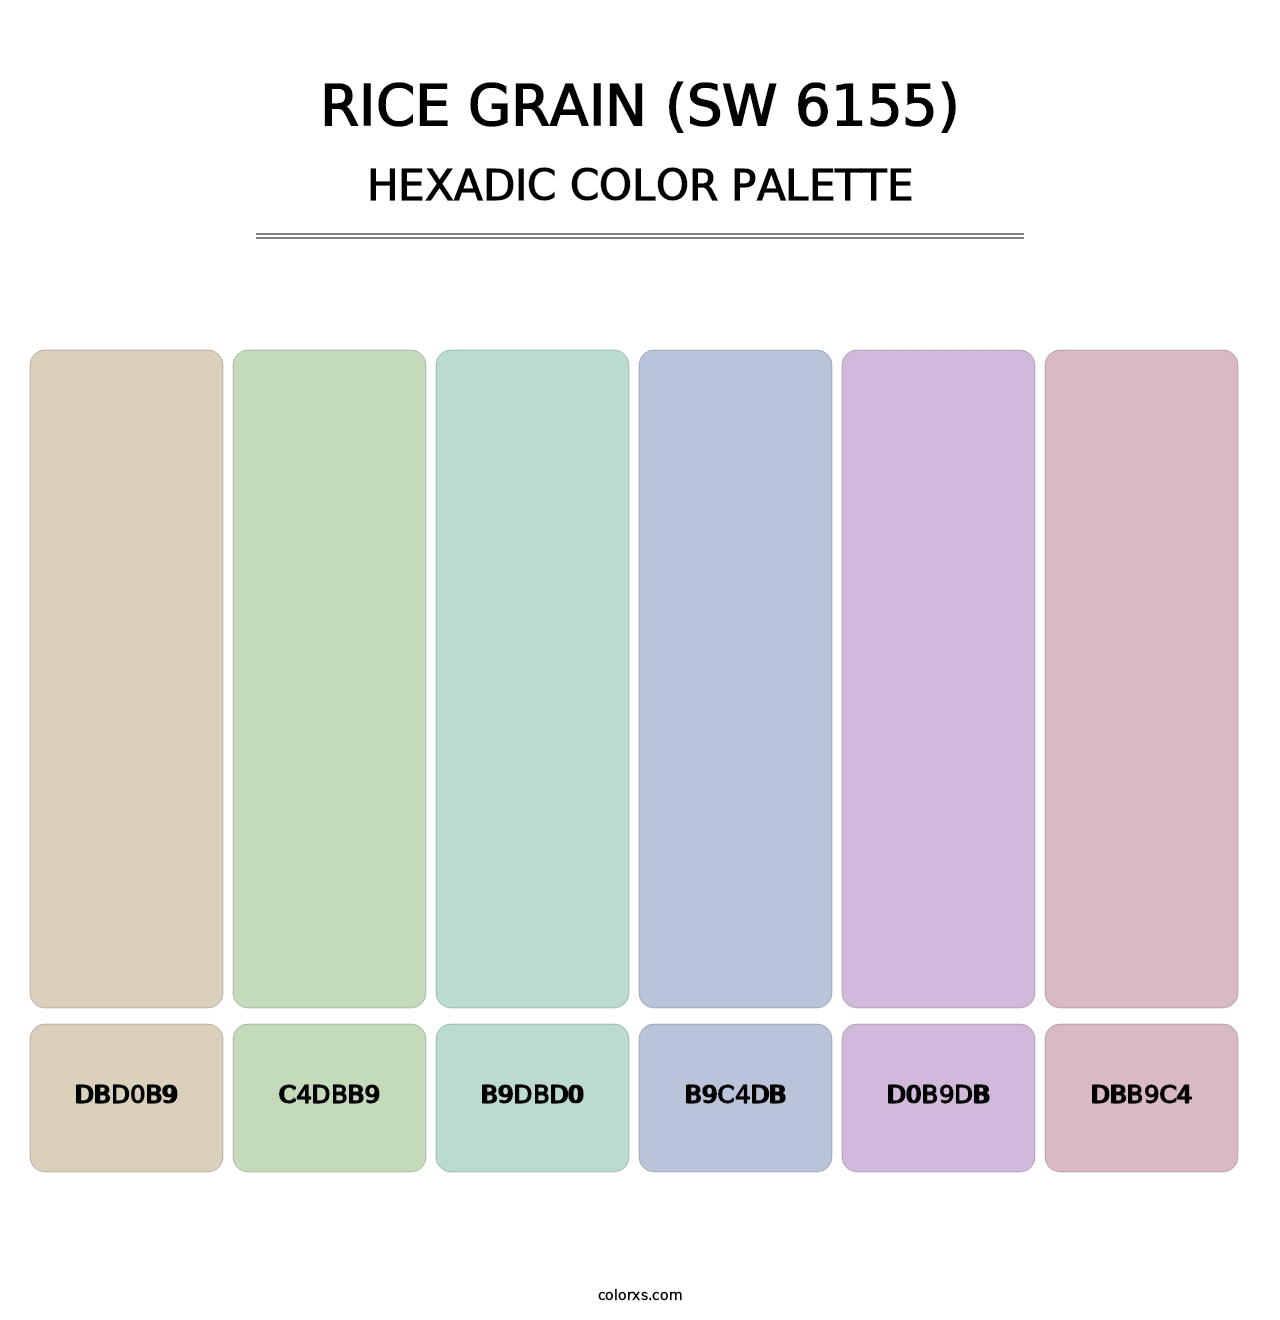 Rice Grain (SW 6155) - Hexadic Color Palette